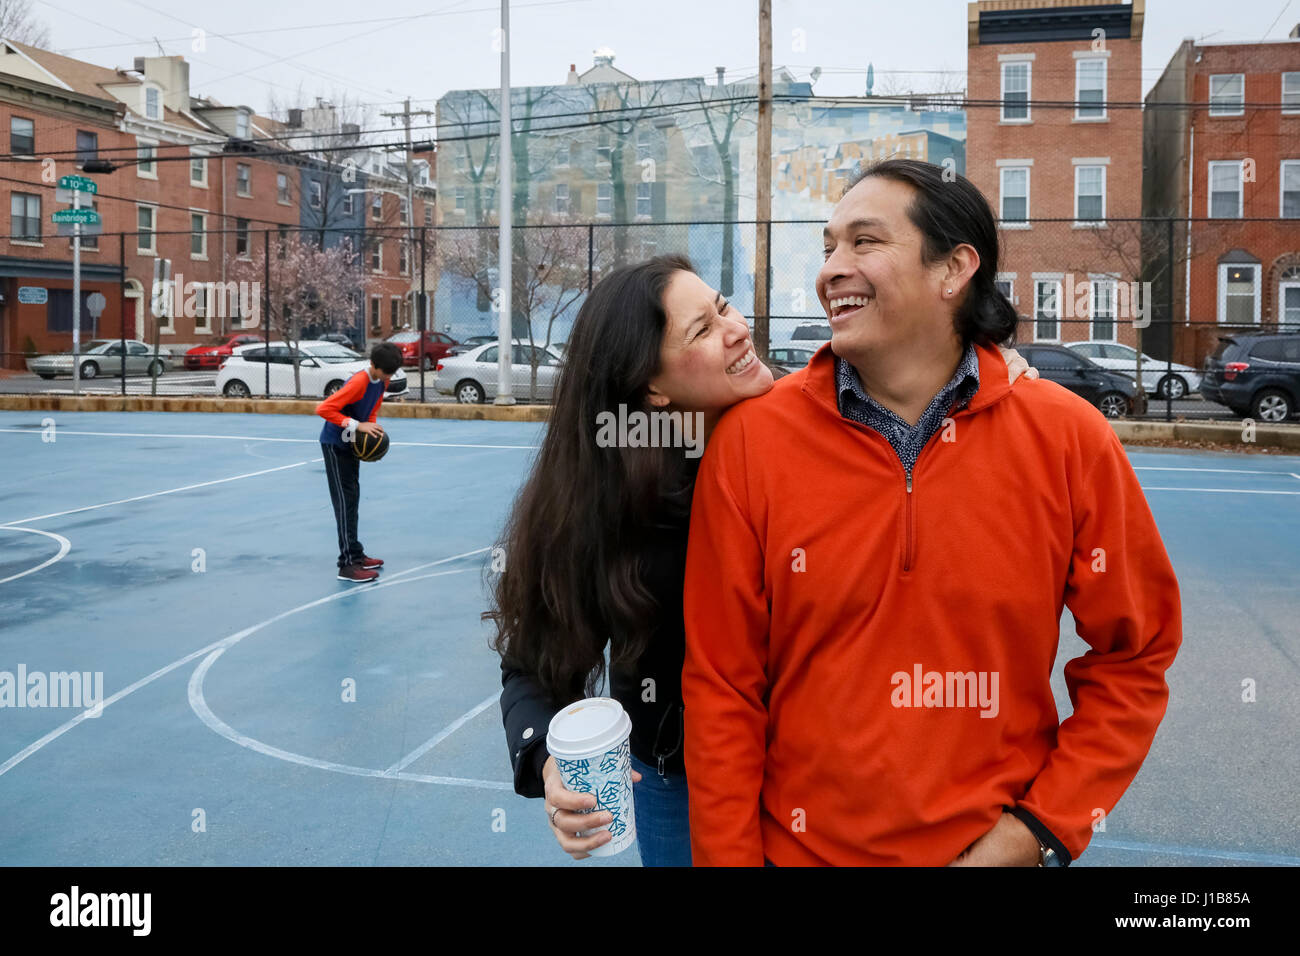 Couple smiling on urban basketball court Stock Photo